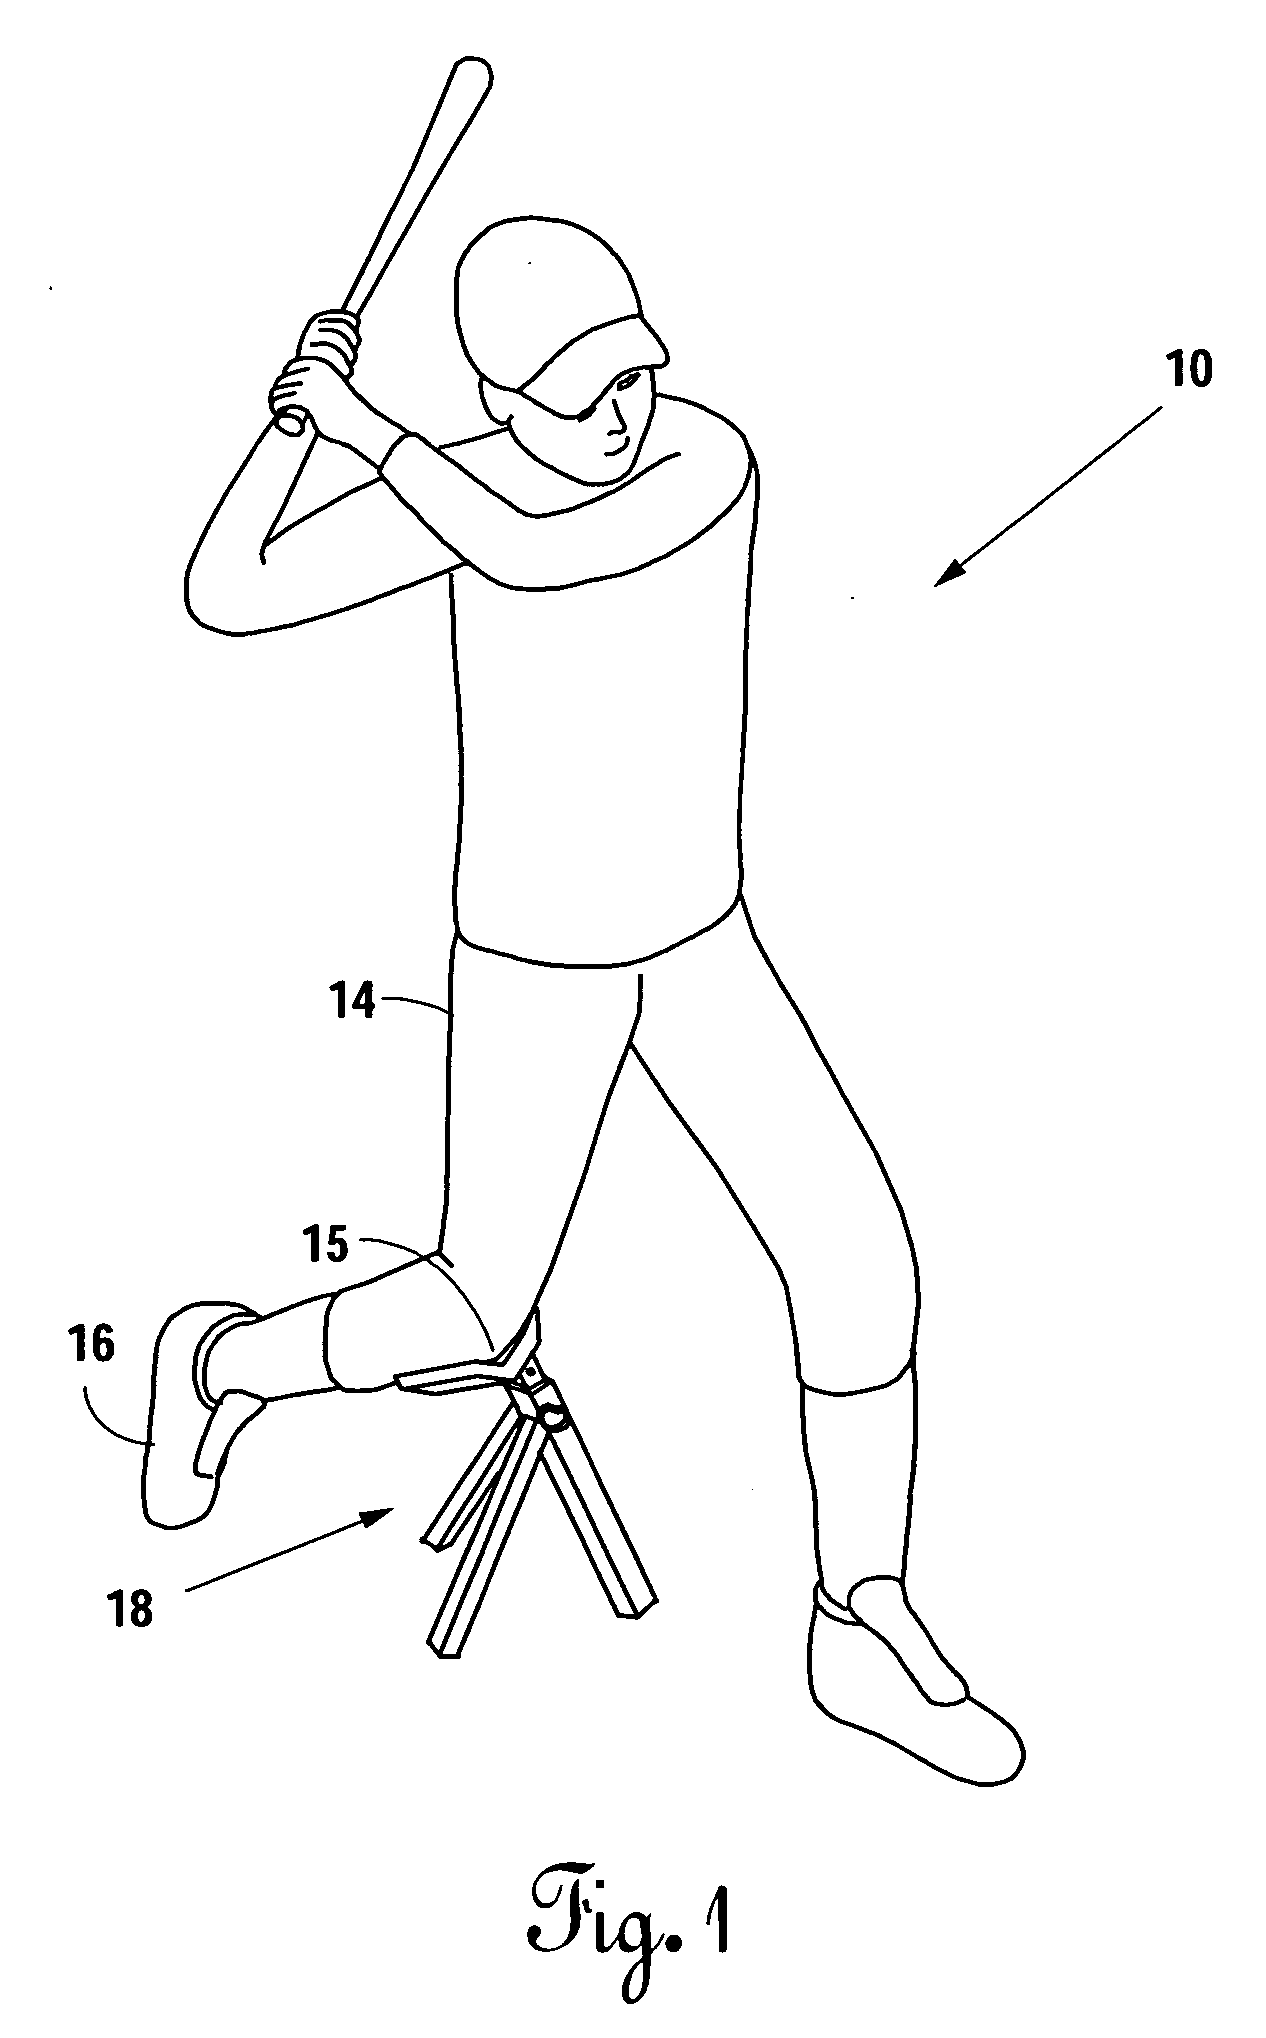 Sports swing training apparatus and method